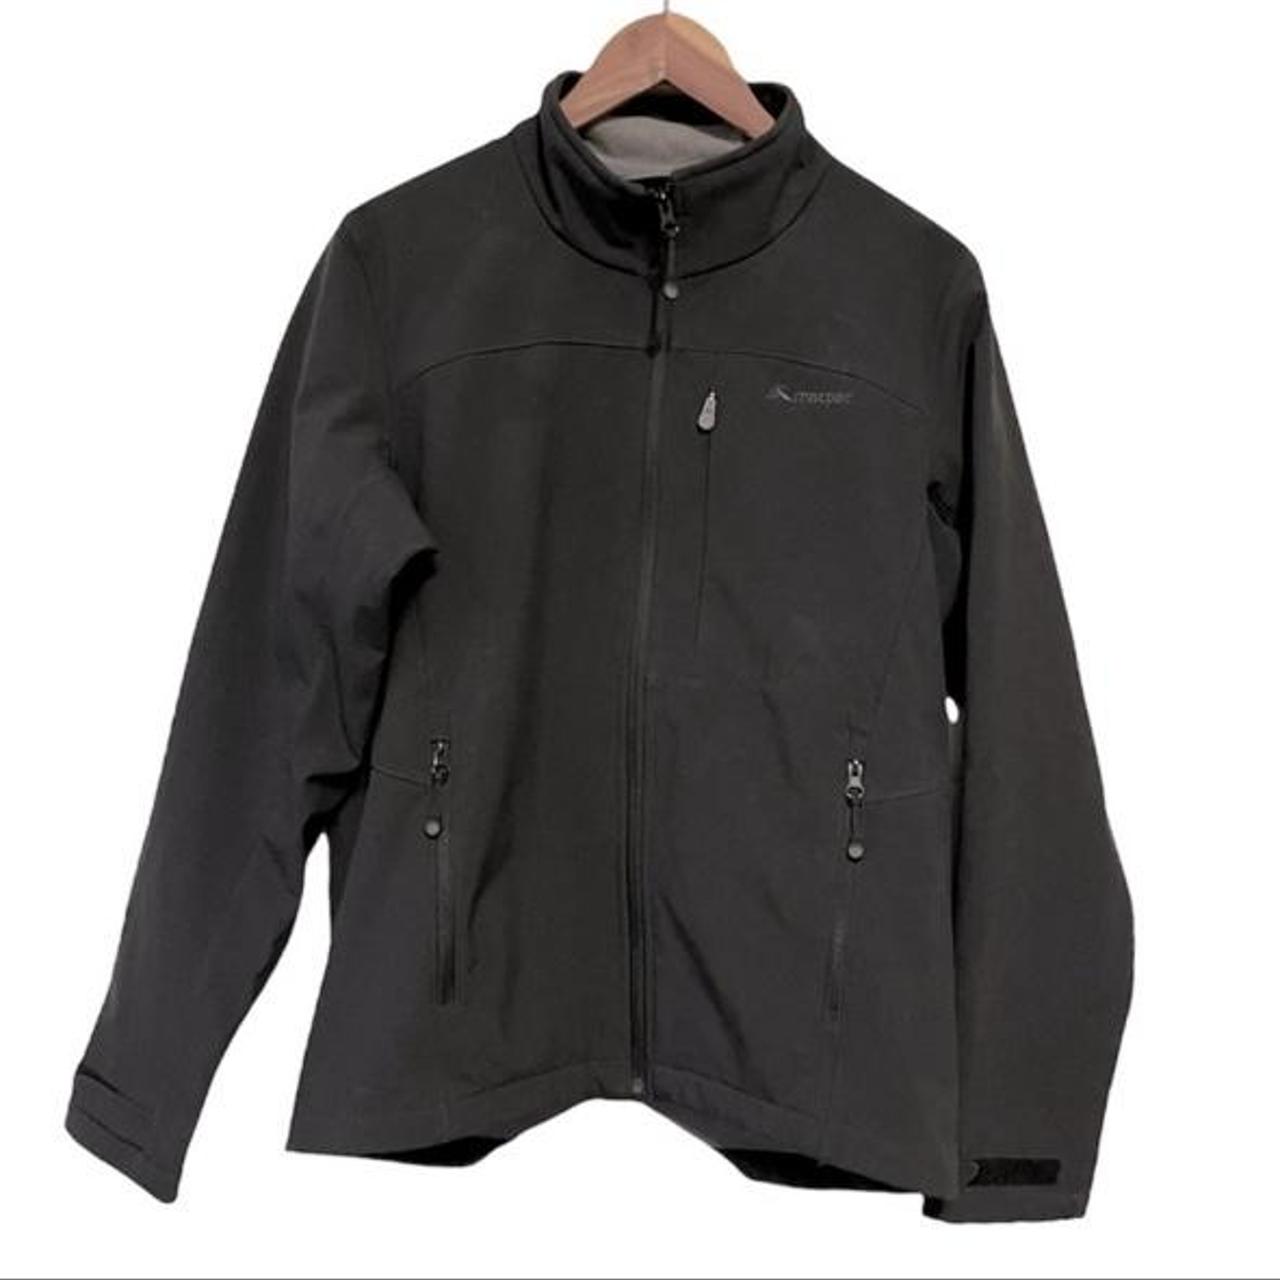 Macpac S Sabre Soft Shell jacket - black - water... - Depop